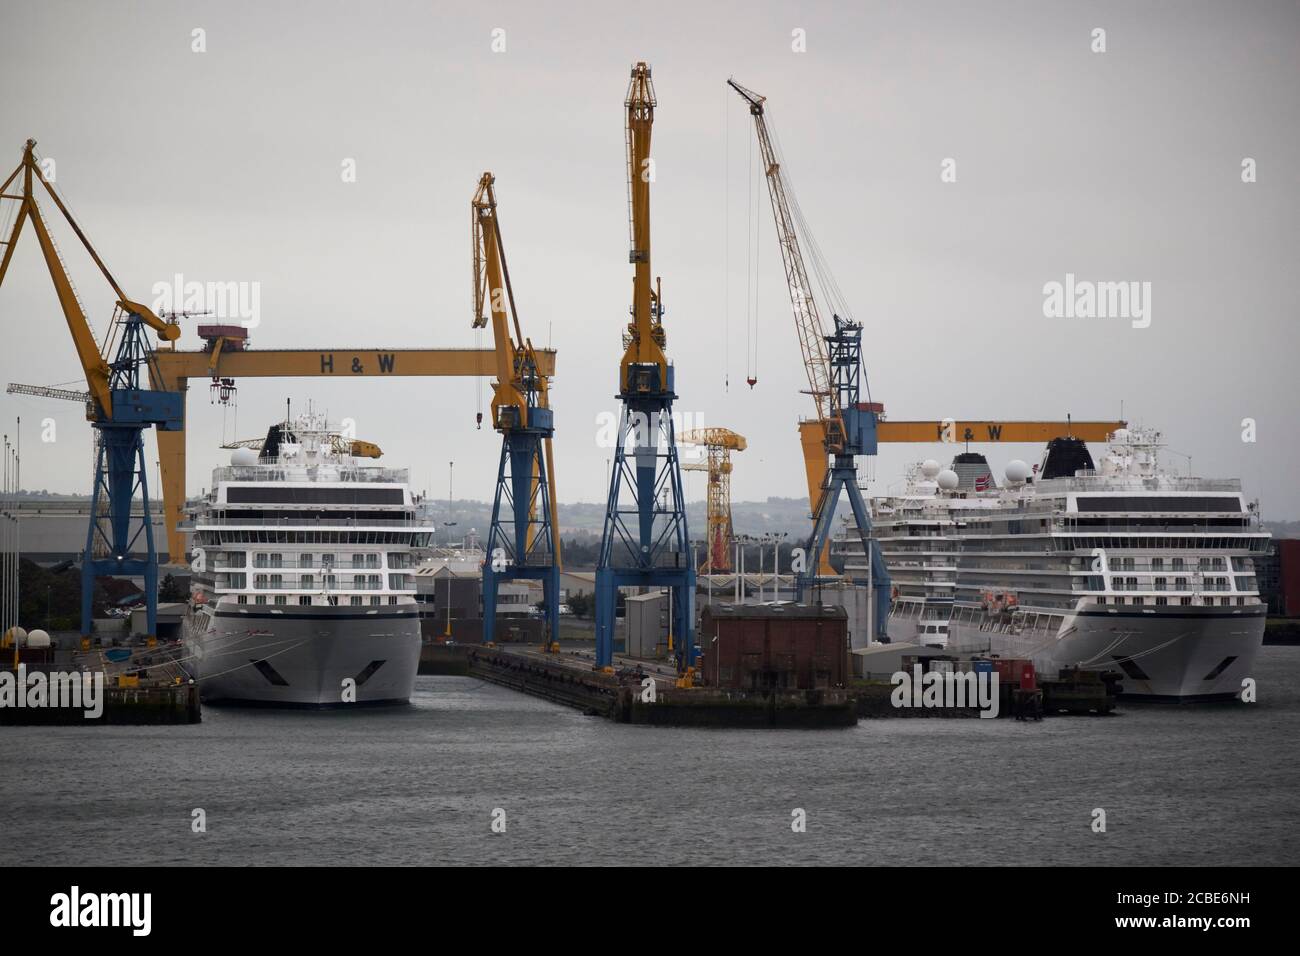 viking cruises redundant cruise ships berthed in belfast during coronavirus outbreak in the uk Stock Photo